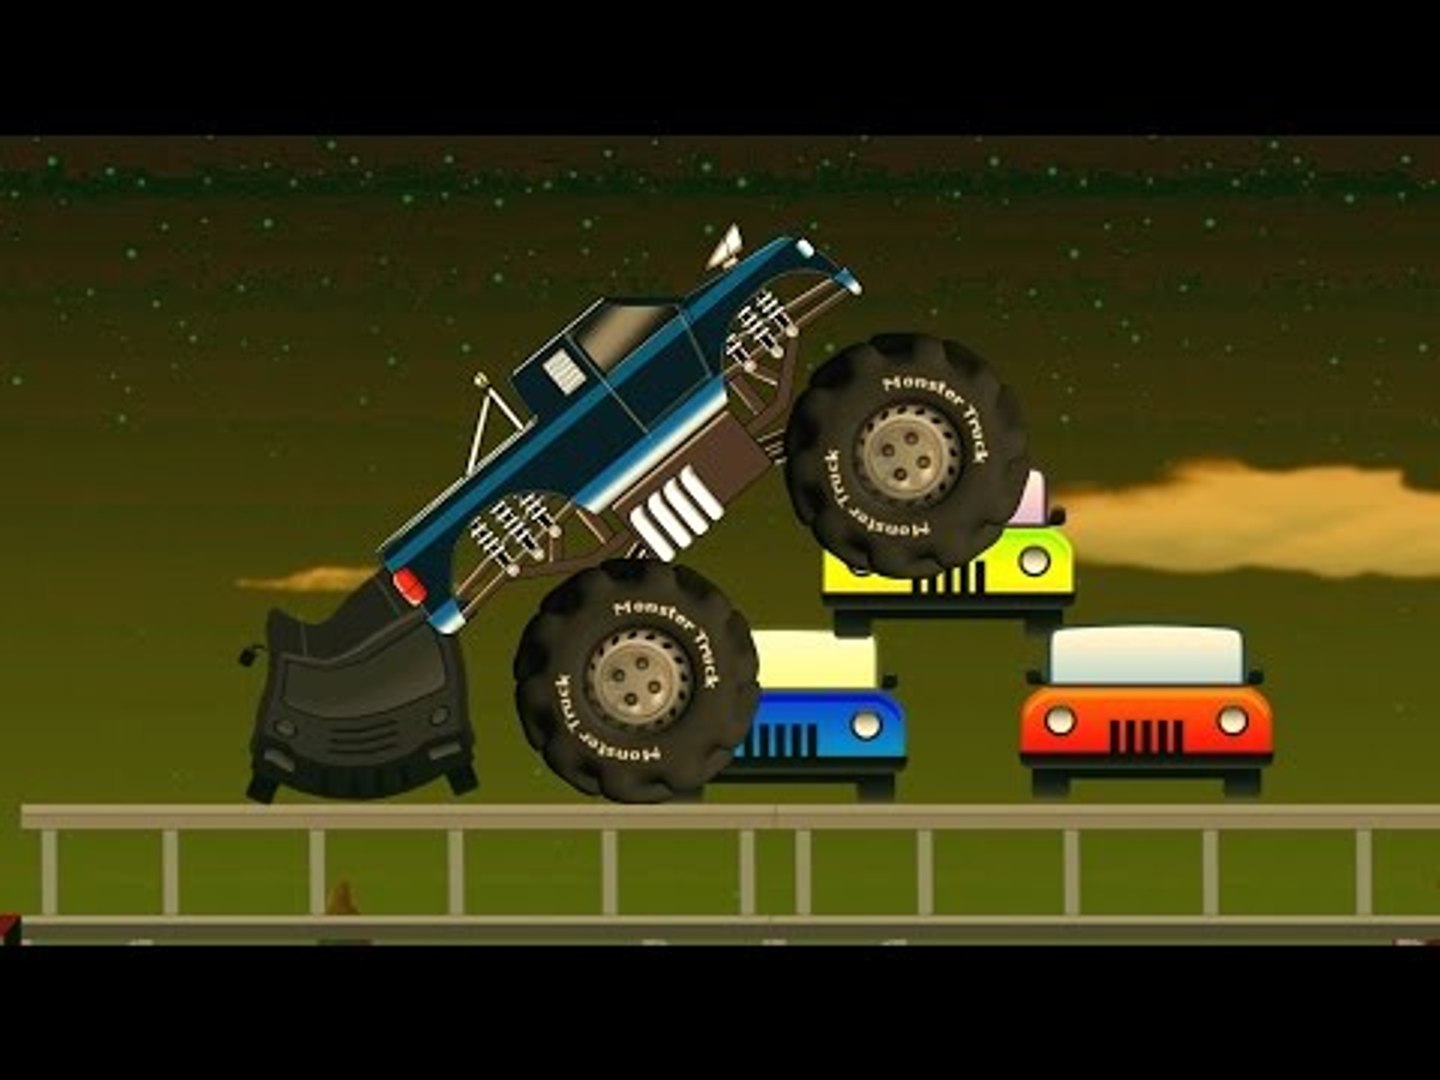 Monster Truck Destroyer – Apps no Google Play